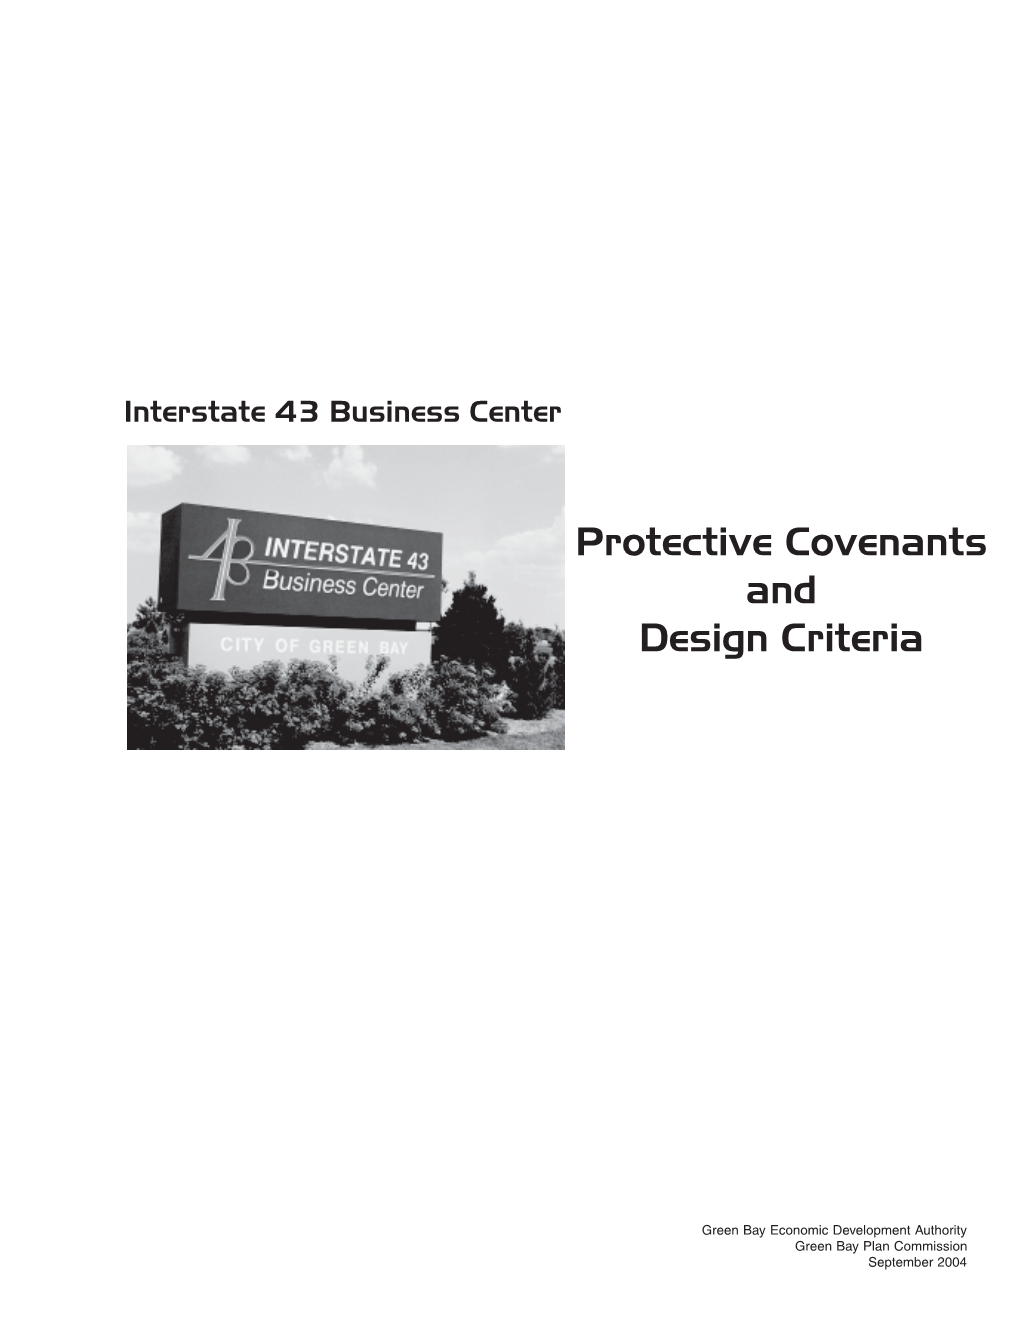 I-43 Protective Covenants